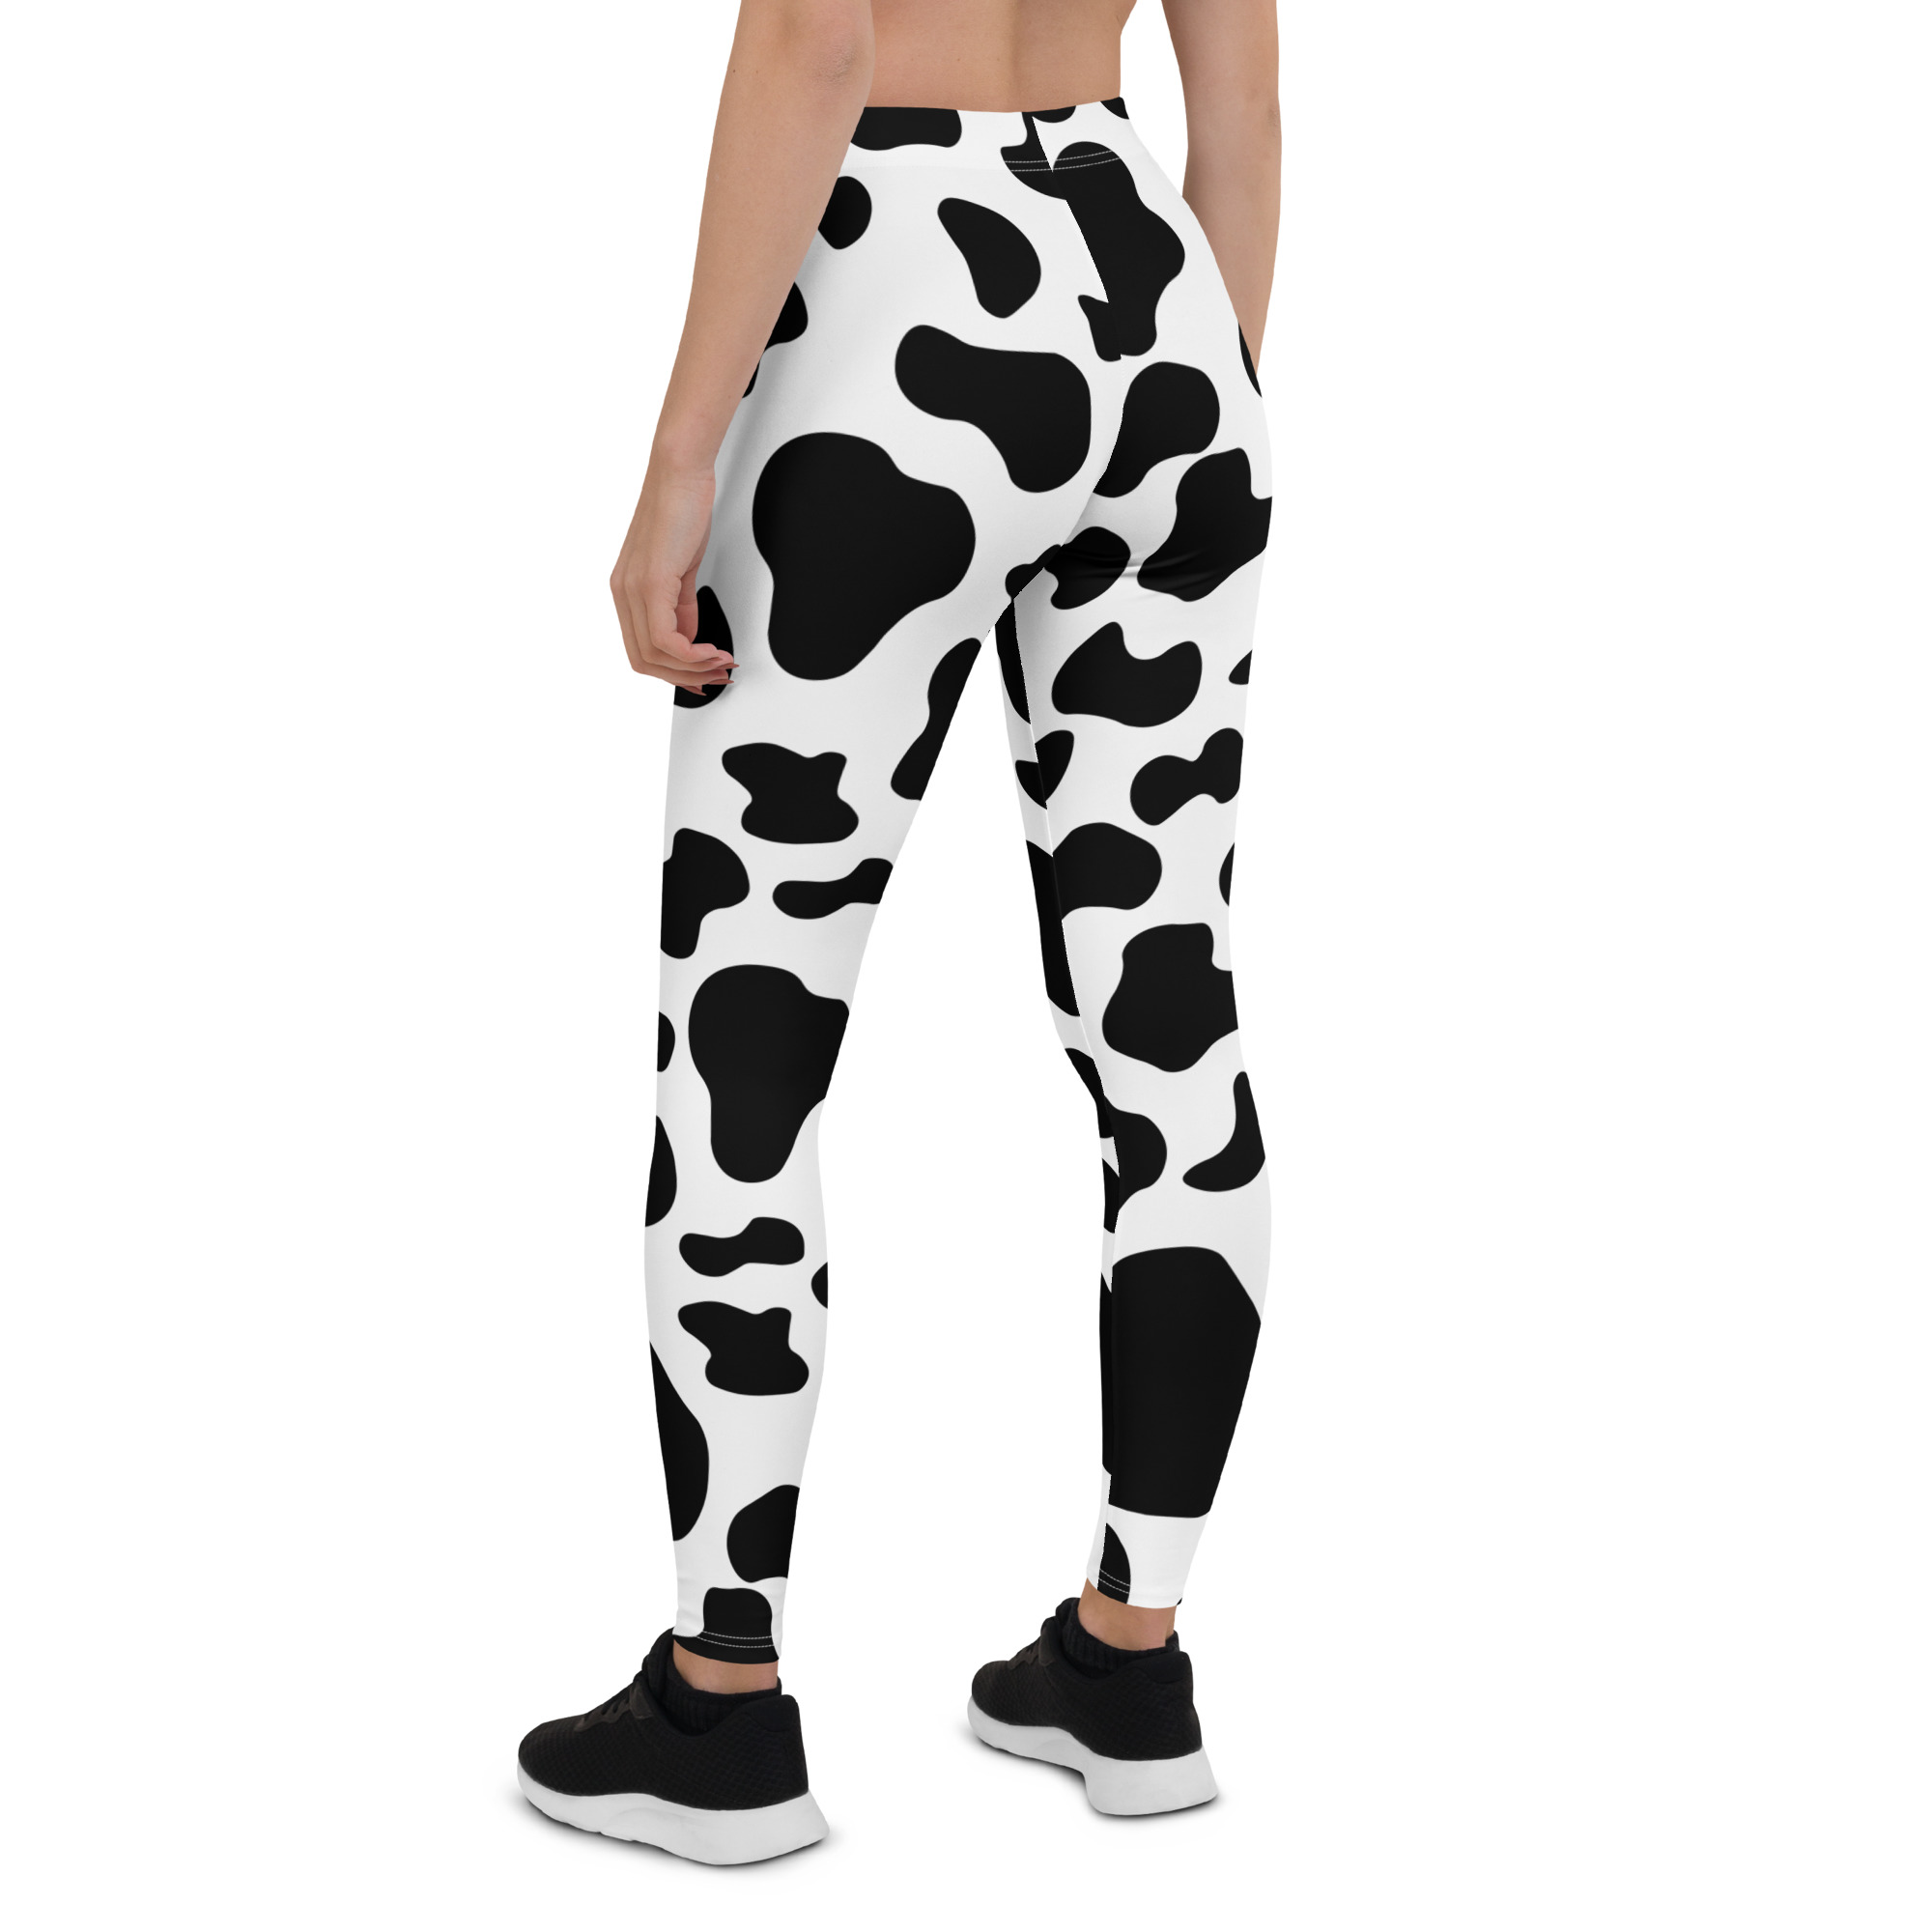 Cow Print Leggings – Online Legging Store